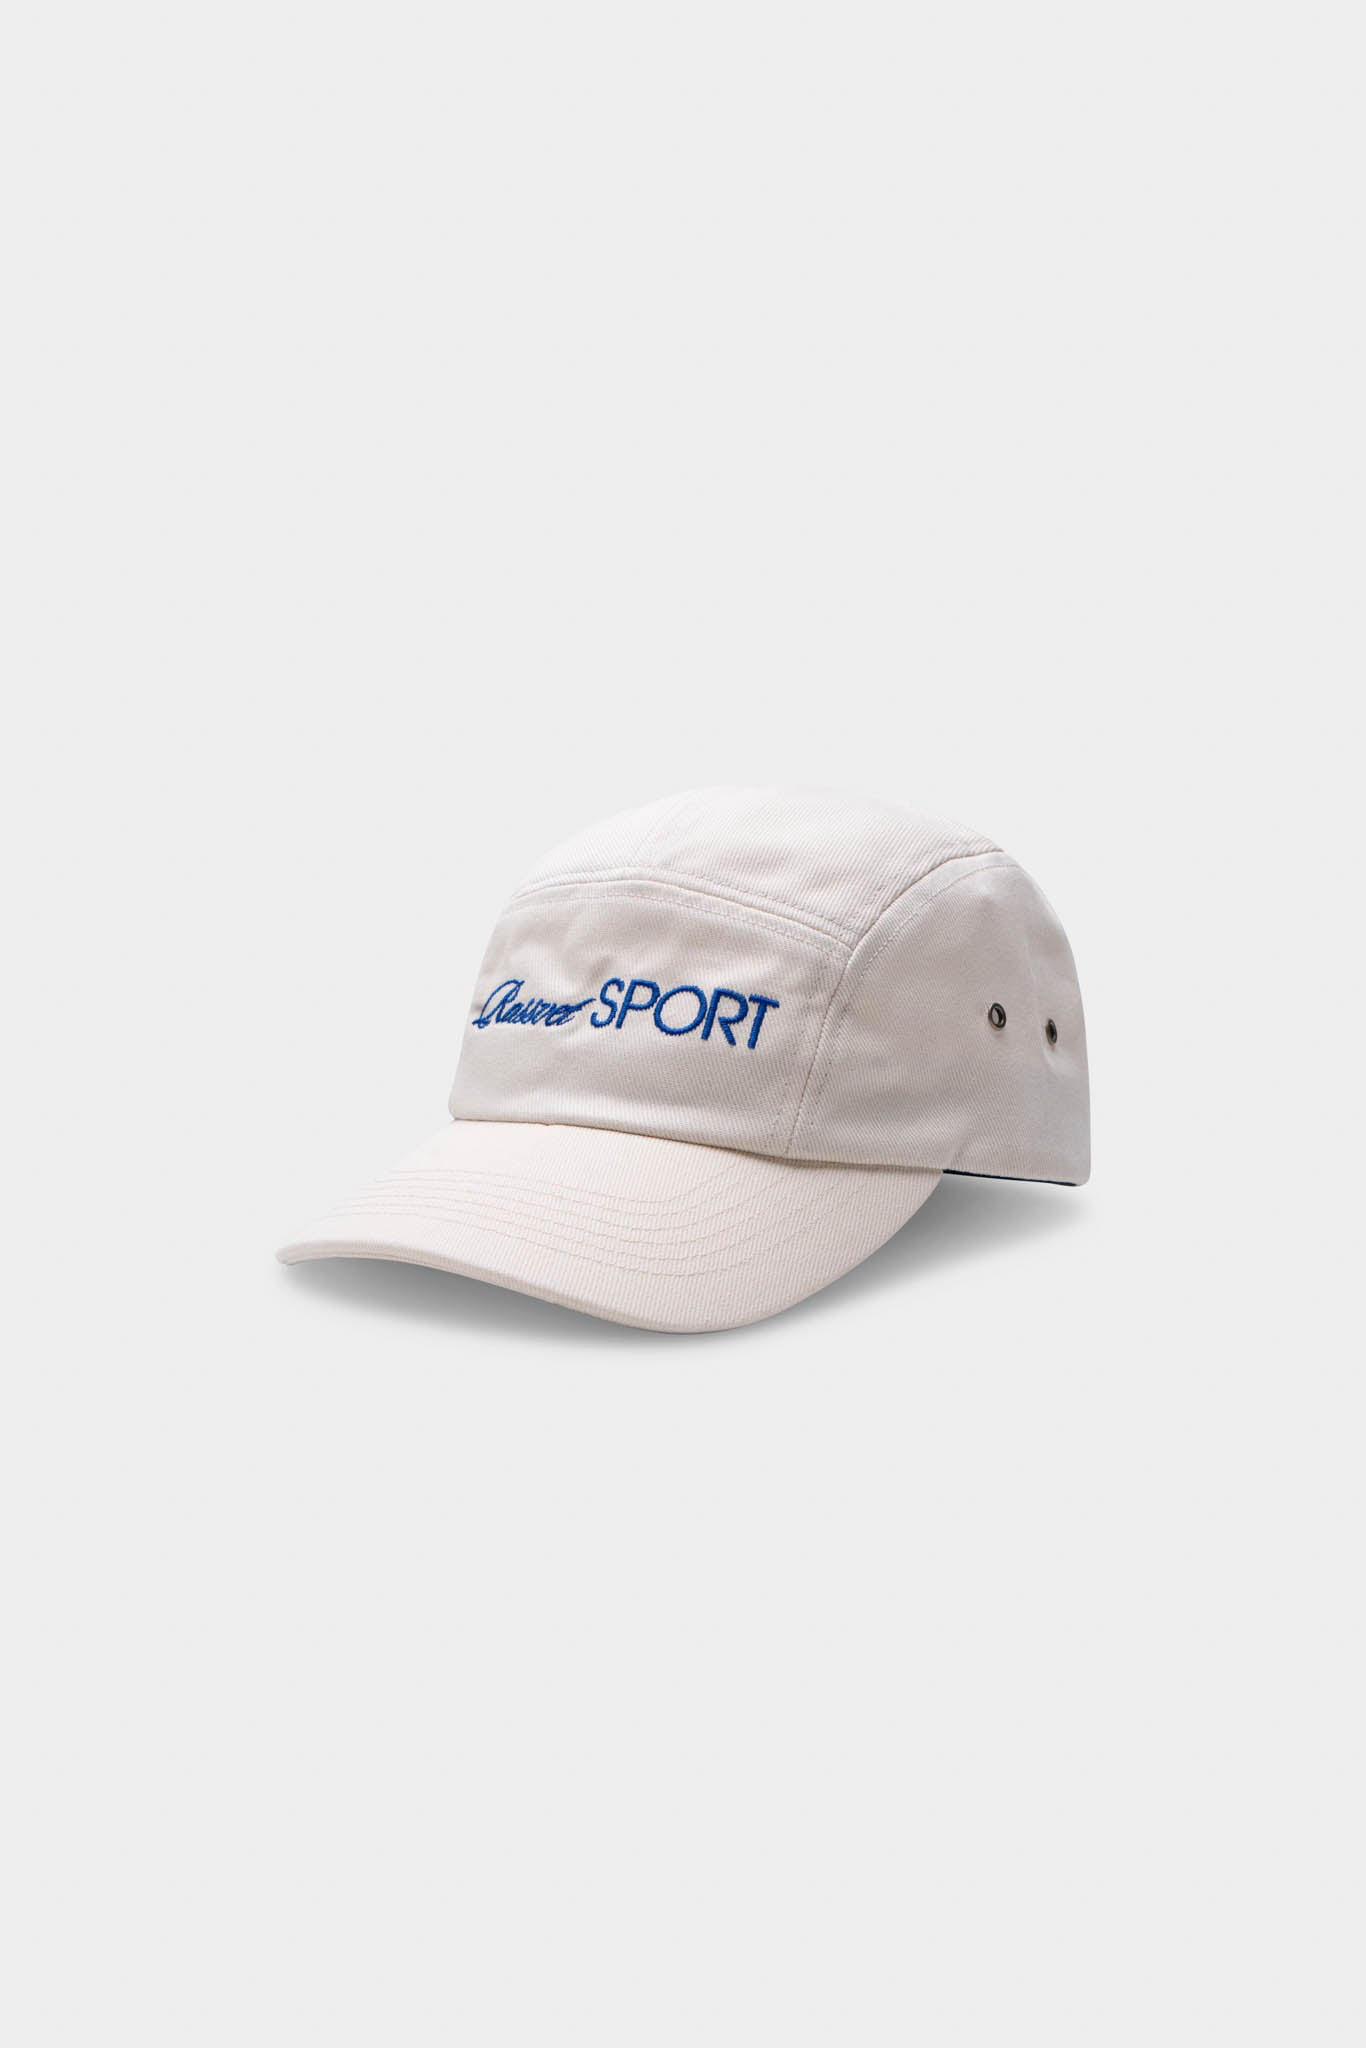 Selectshop FRAME - RASSVET Sport Cap All-accessories Dubai